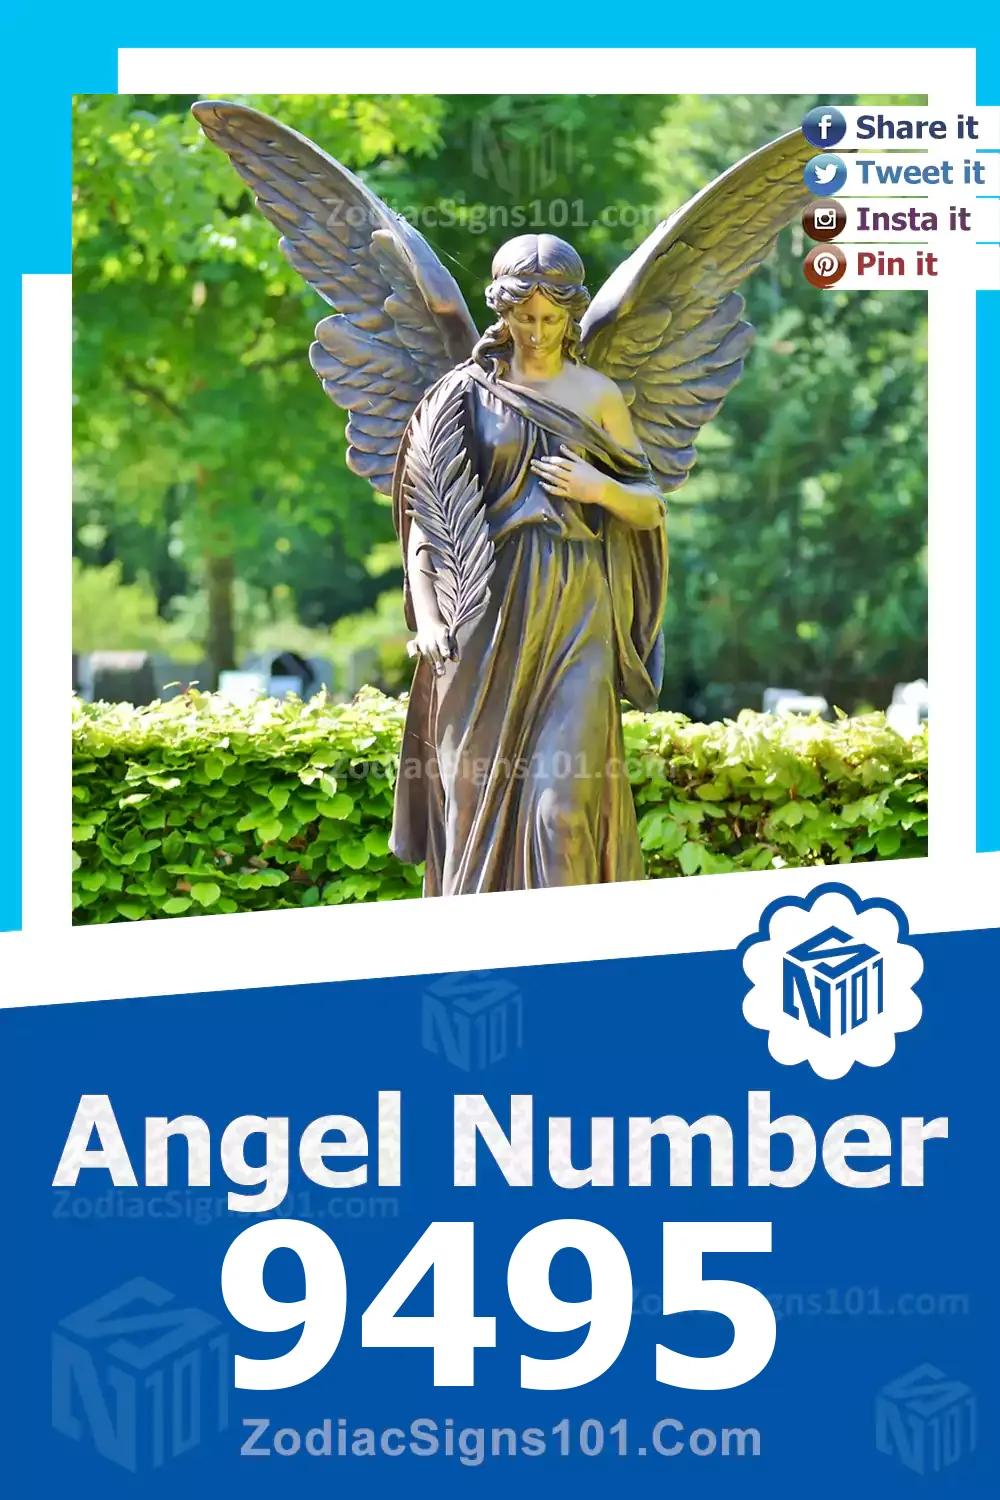 9495-Angel-Number-Meaning.jpg